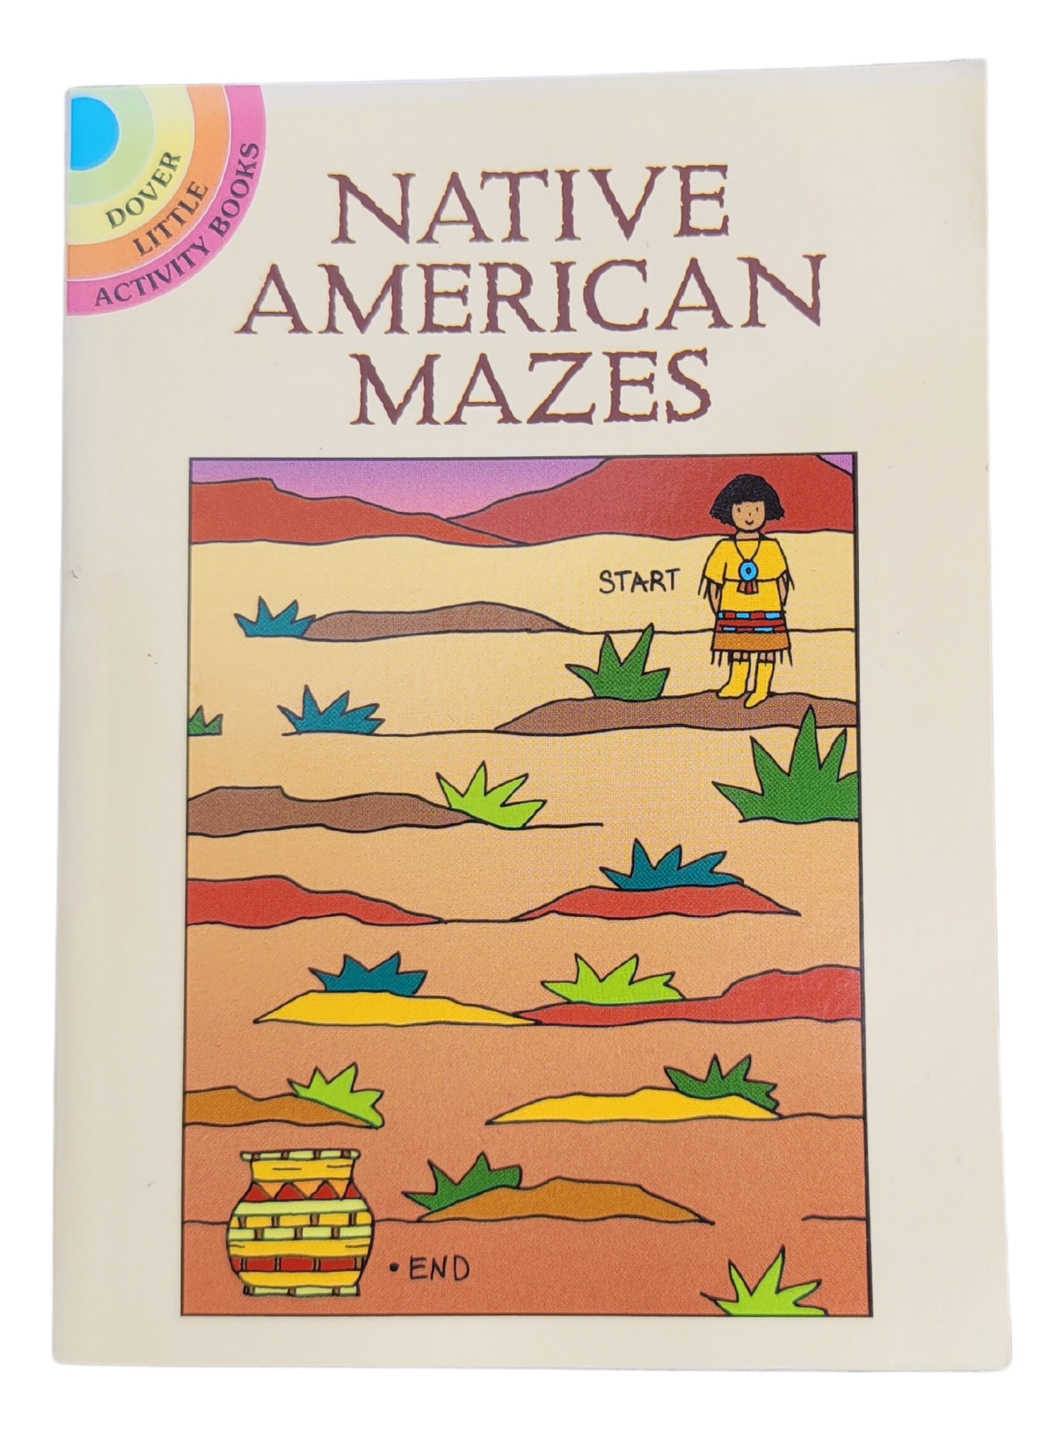 Book Children's - Native American Mazes